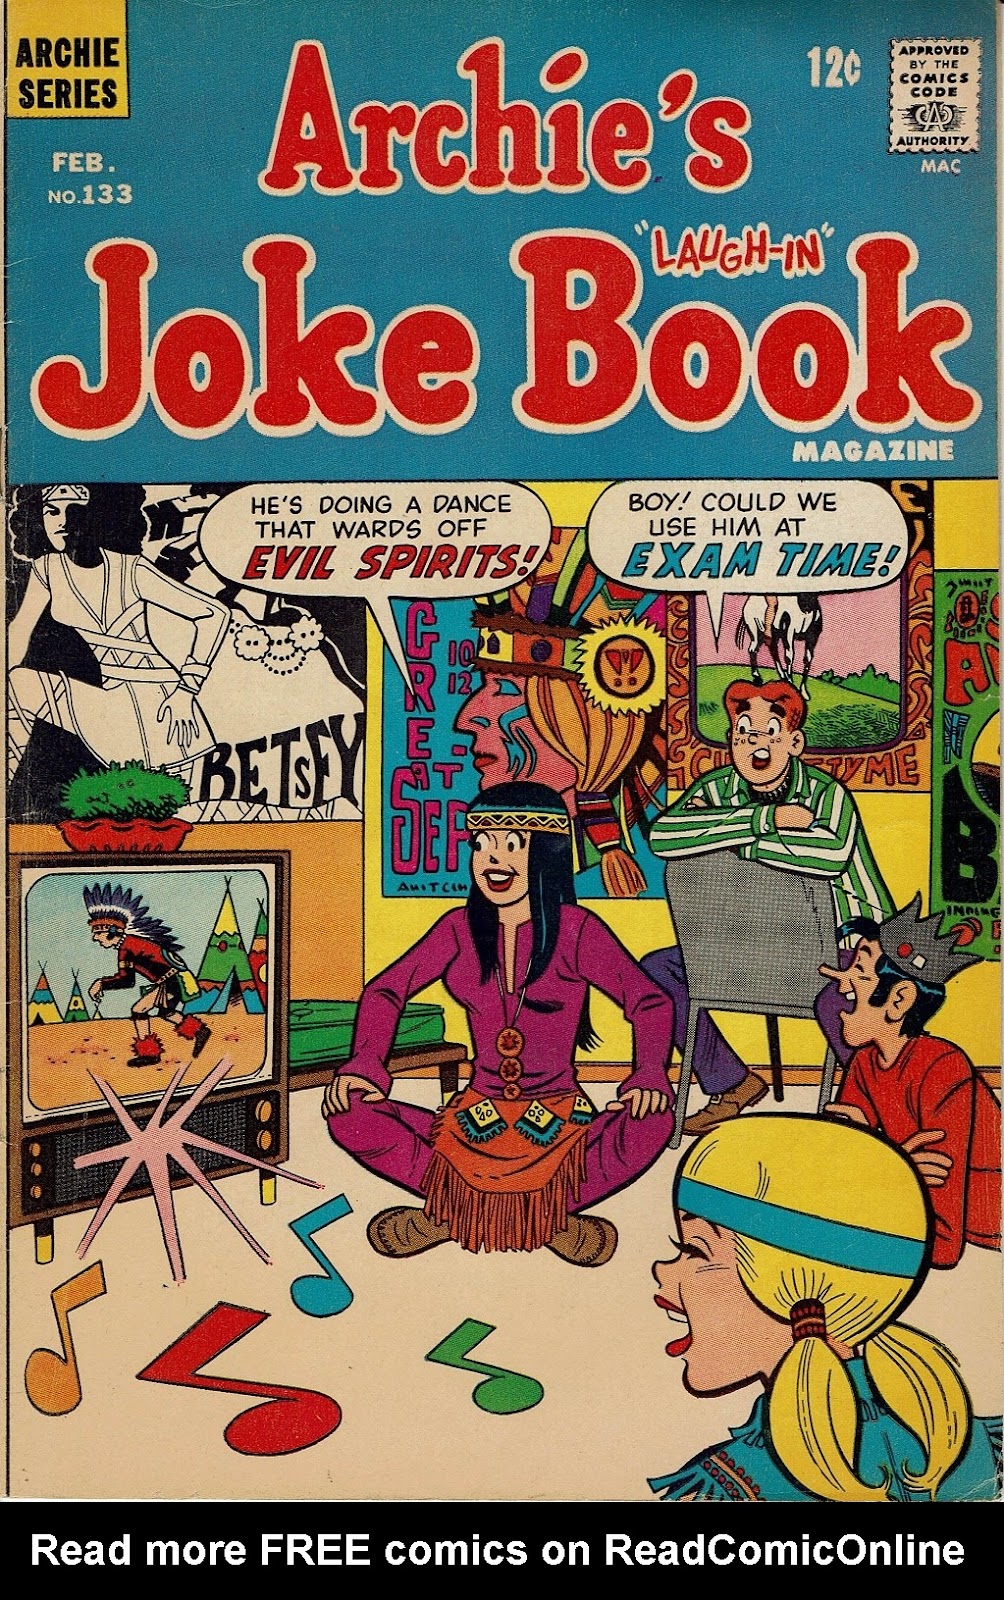 Archie's Joke Book Magazine issue 133 - Page 1